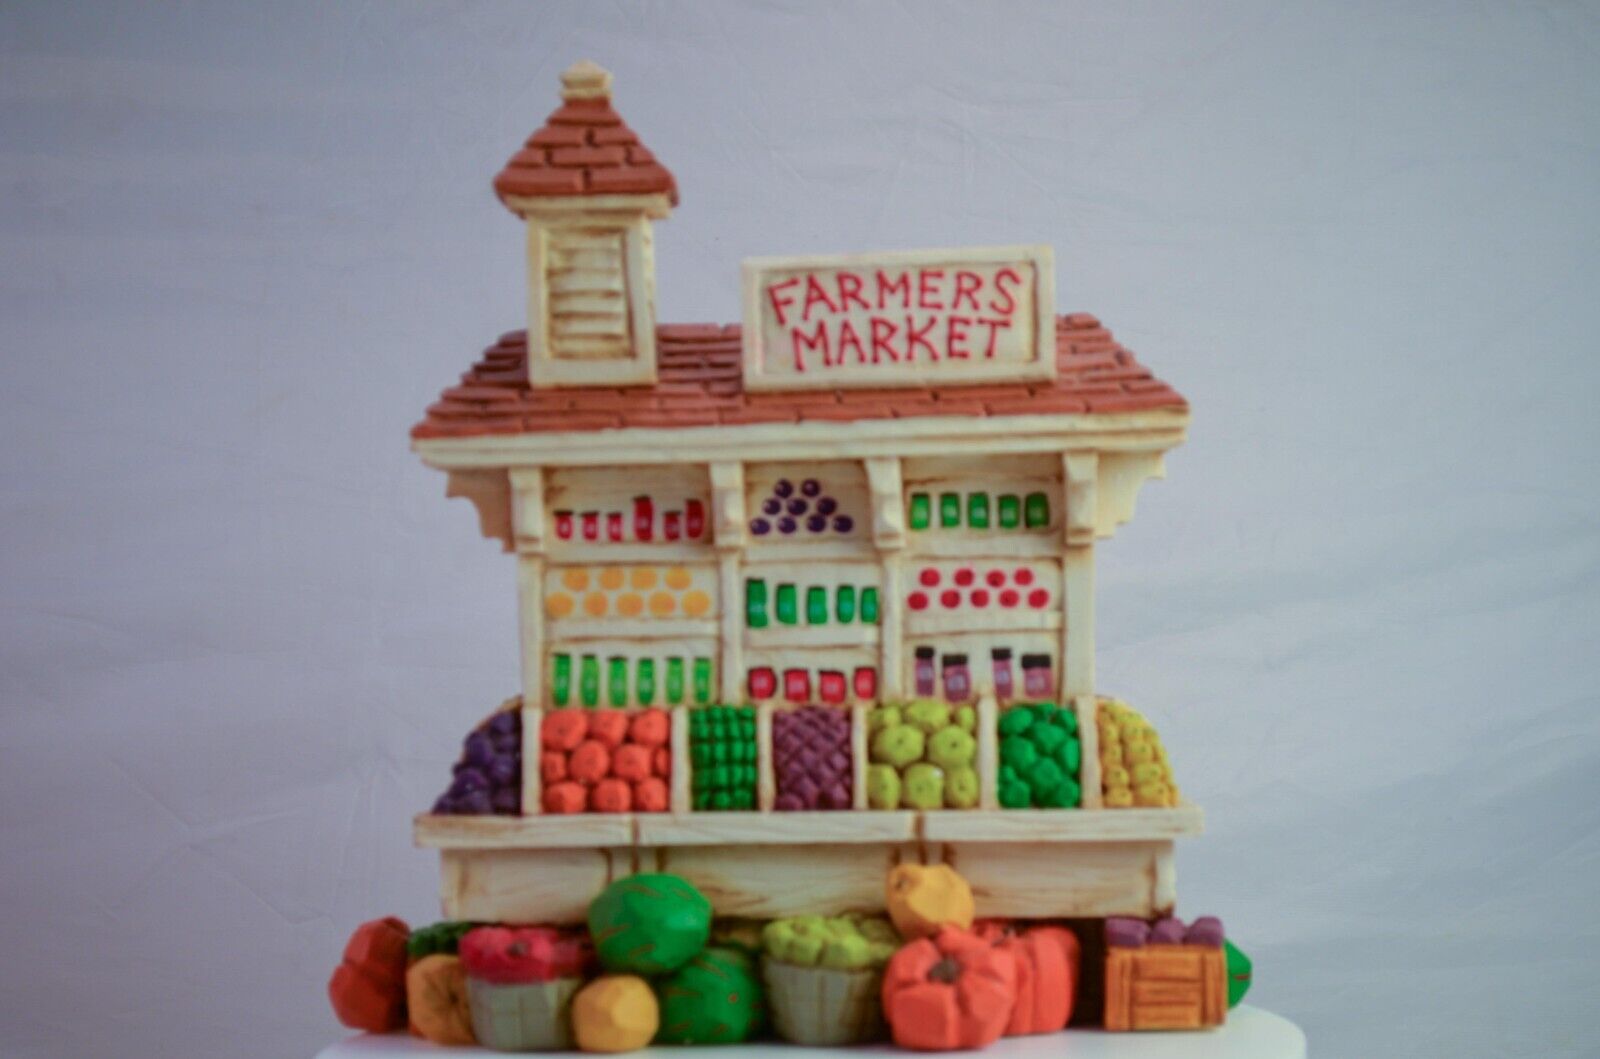 David Frykman “Farmers Market” Display Piece 1996 Limited Edition